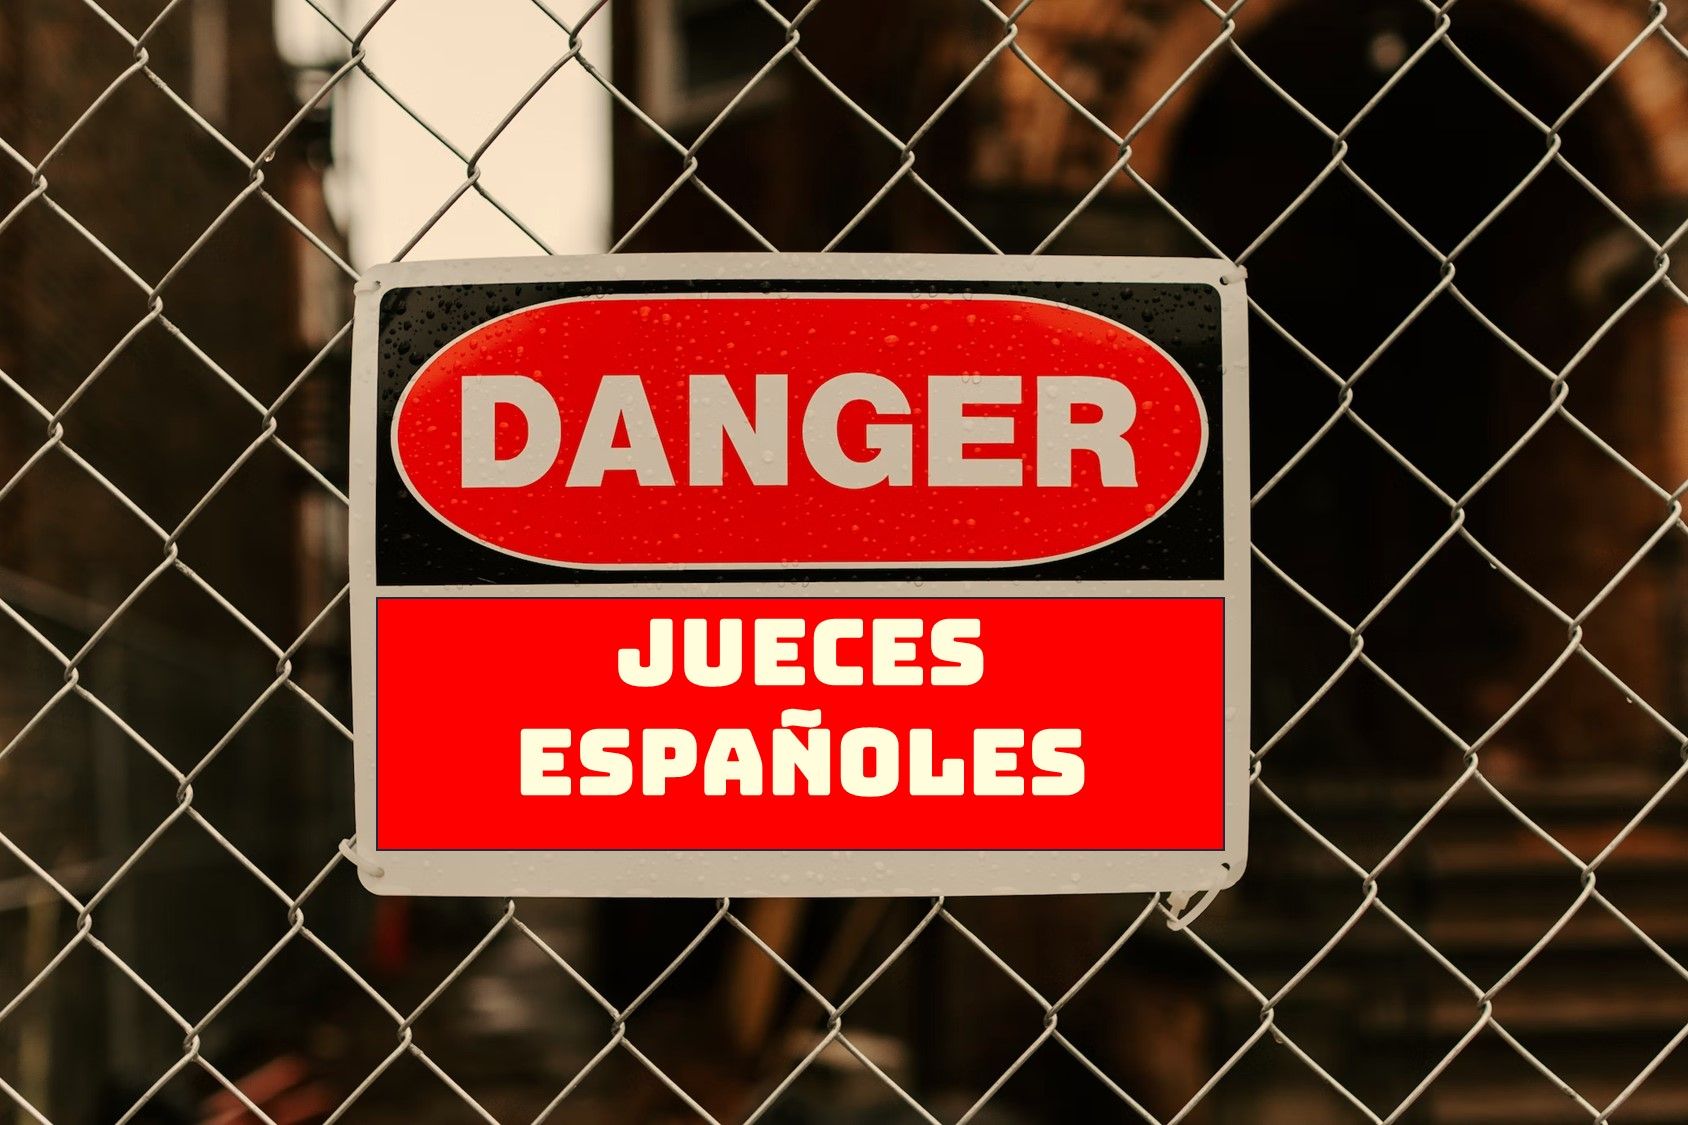 Jueces Españoles Danger